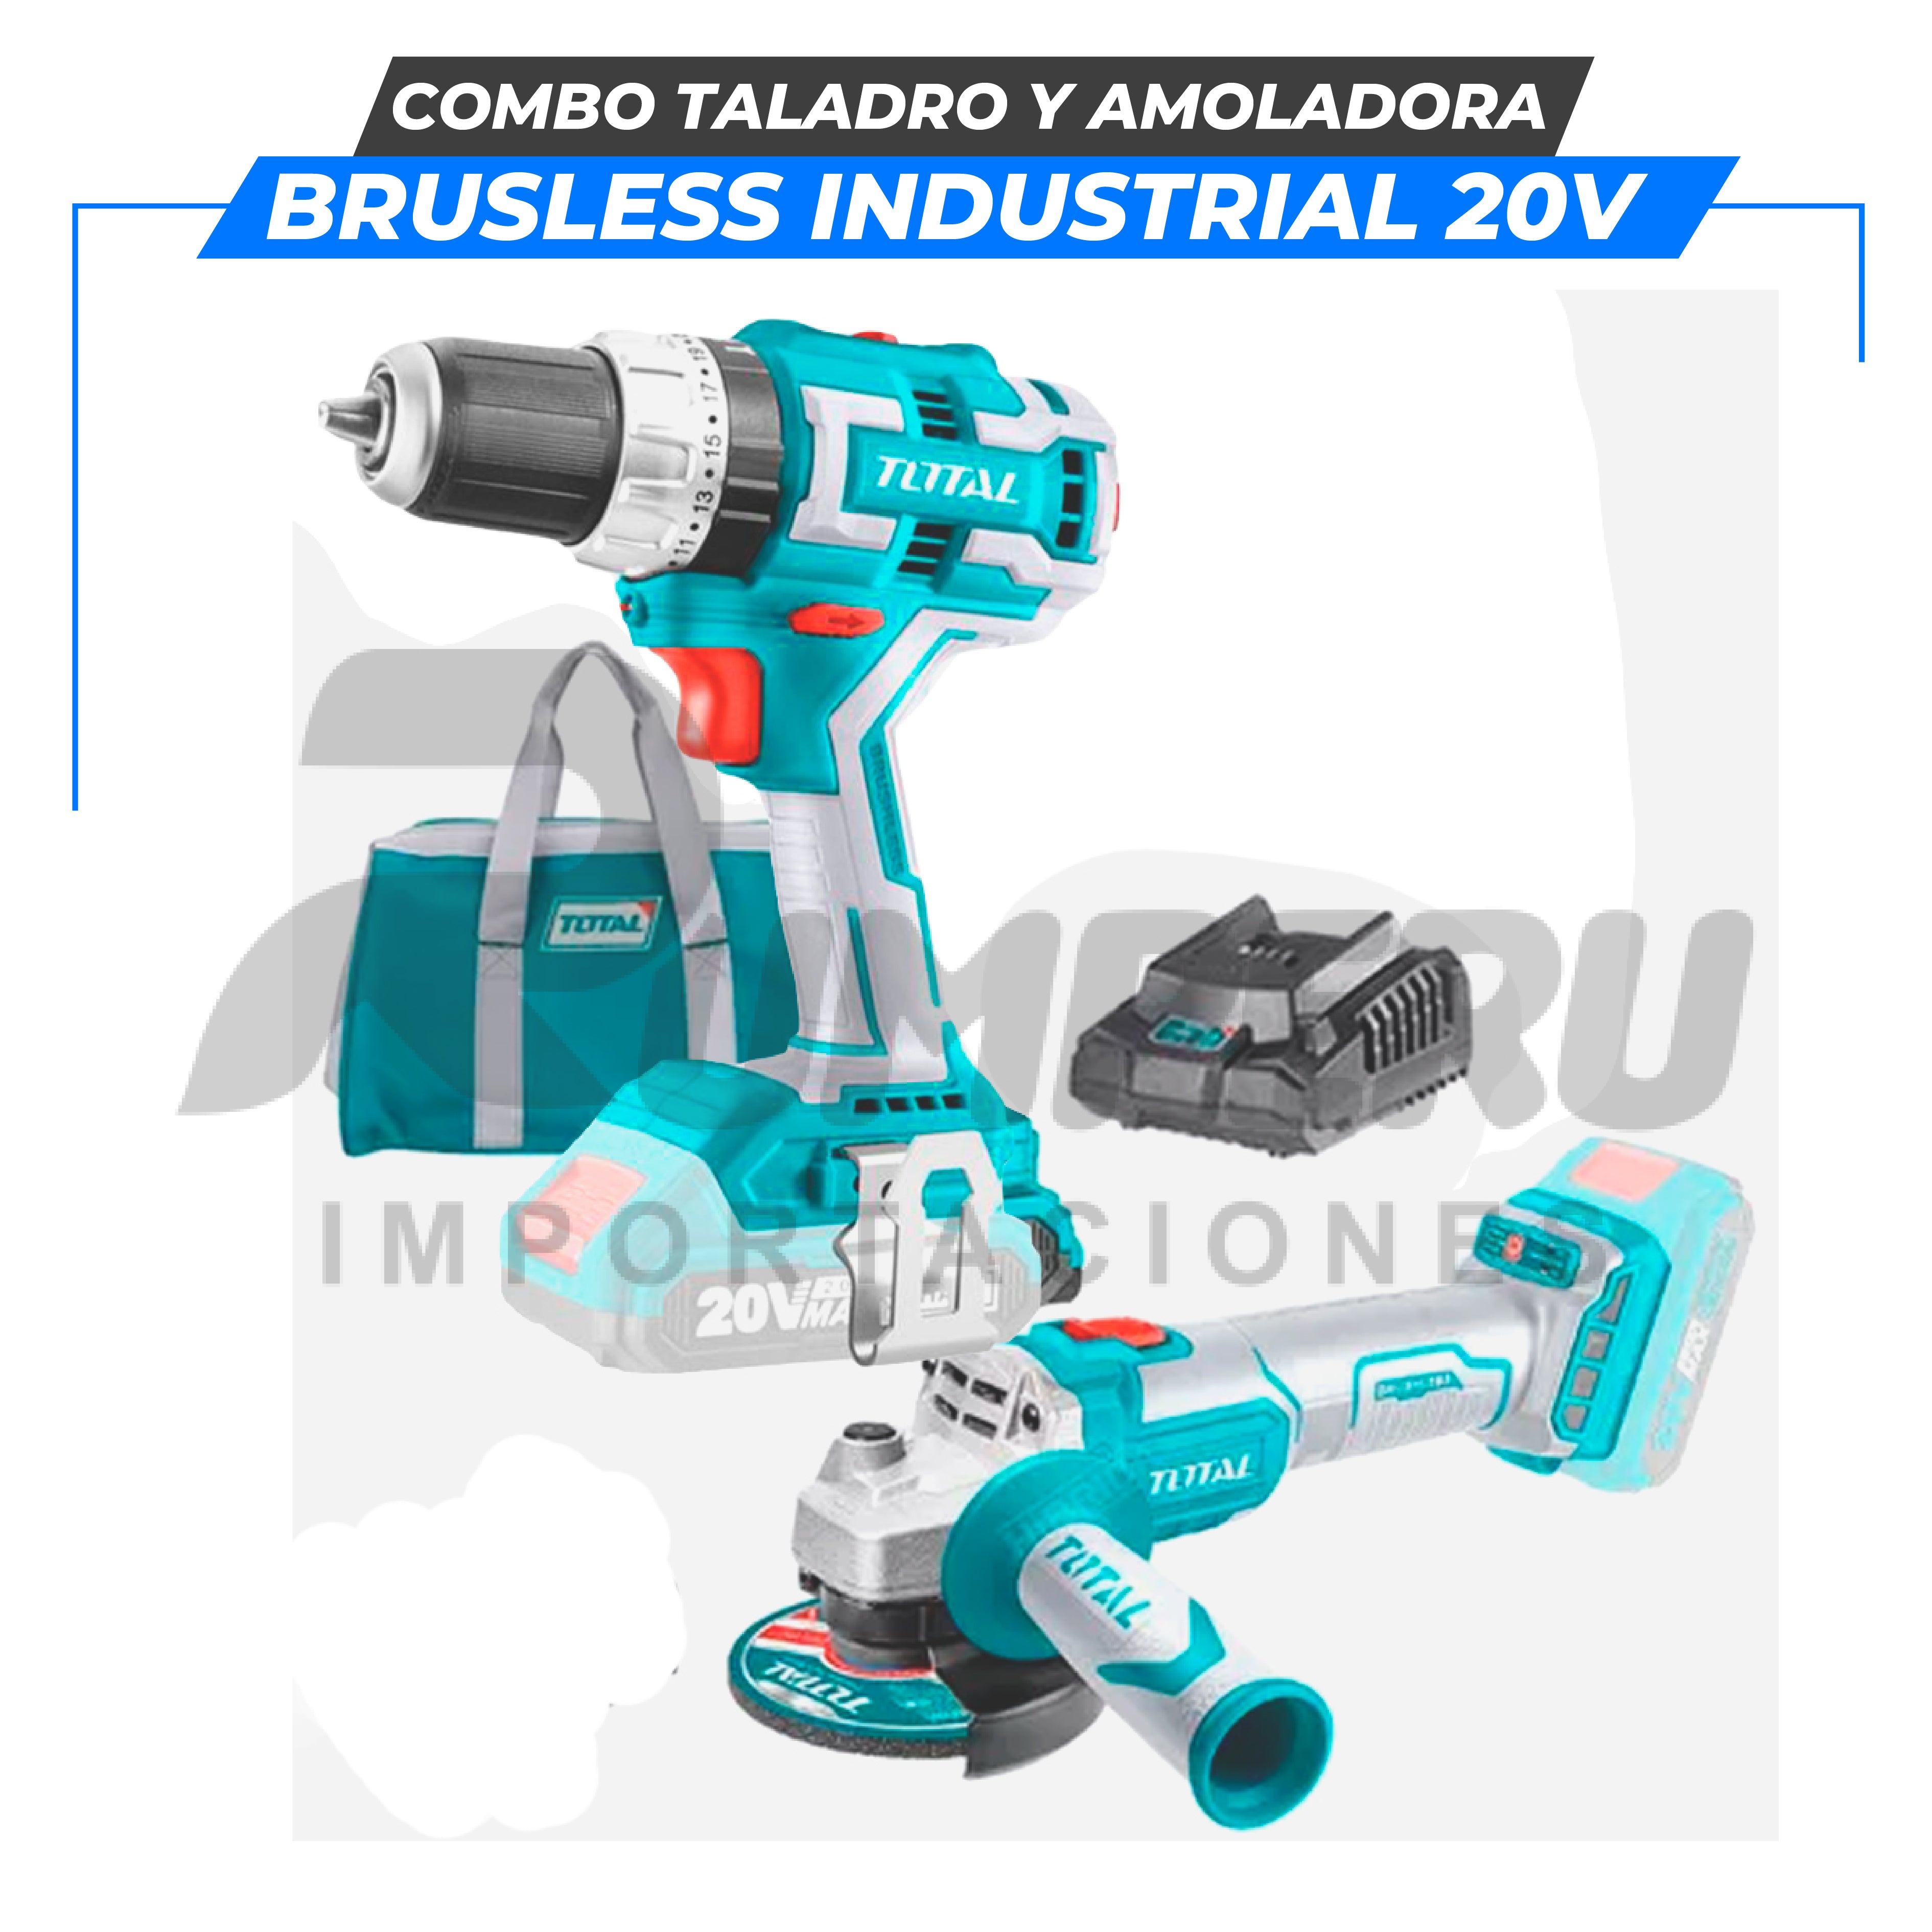 Combo Taladro y Amoladora BRUSLESS 20V INDUSTRIAL